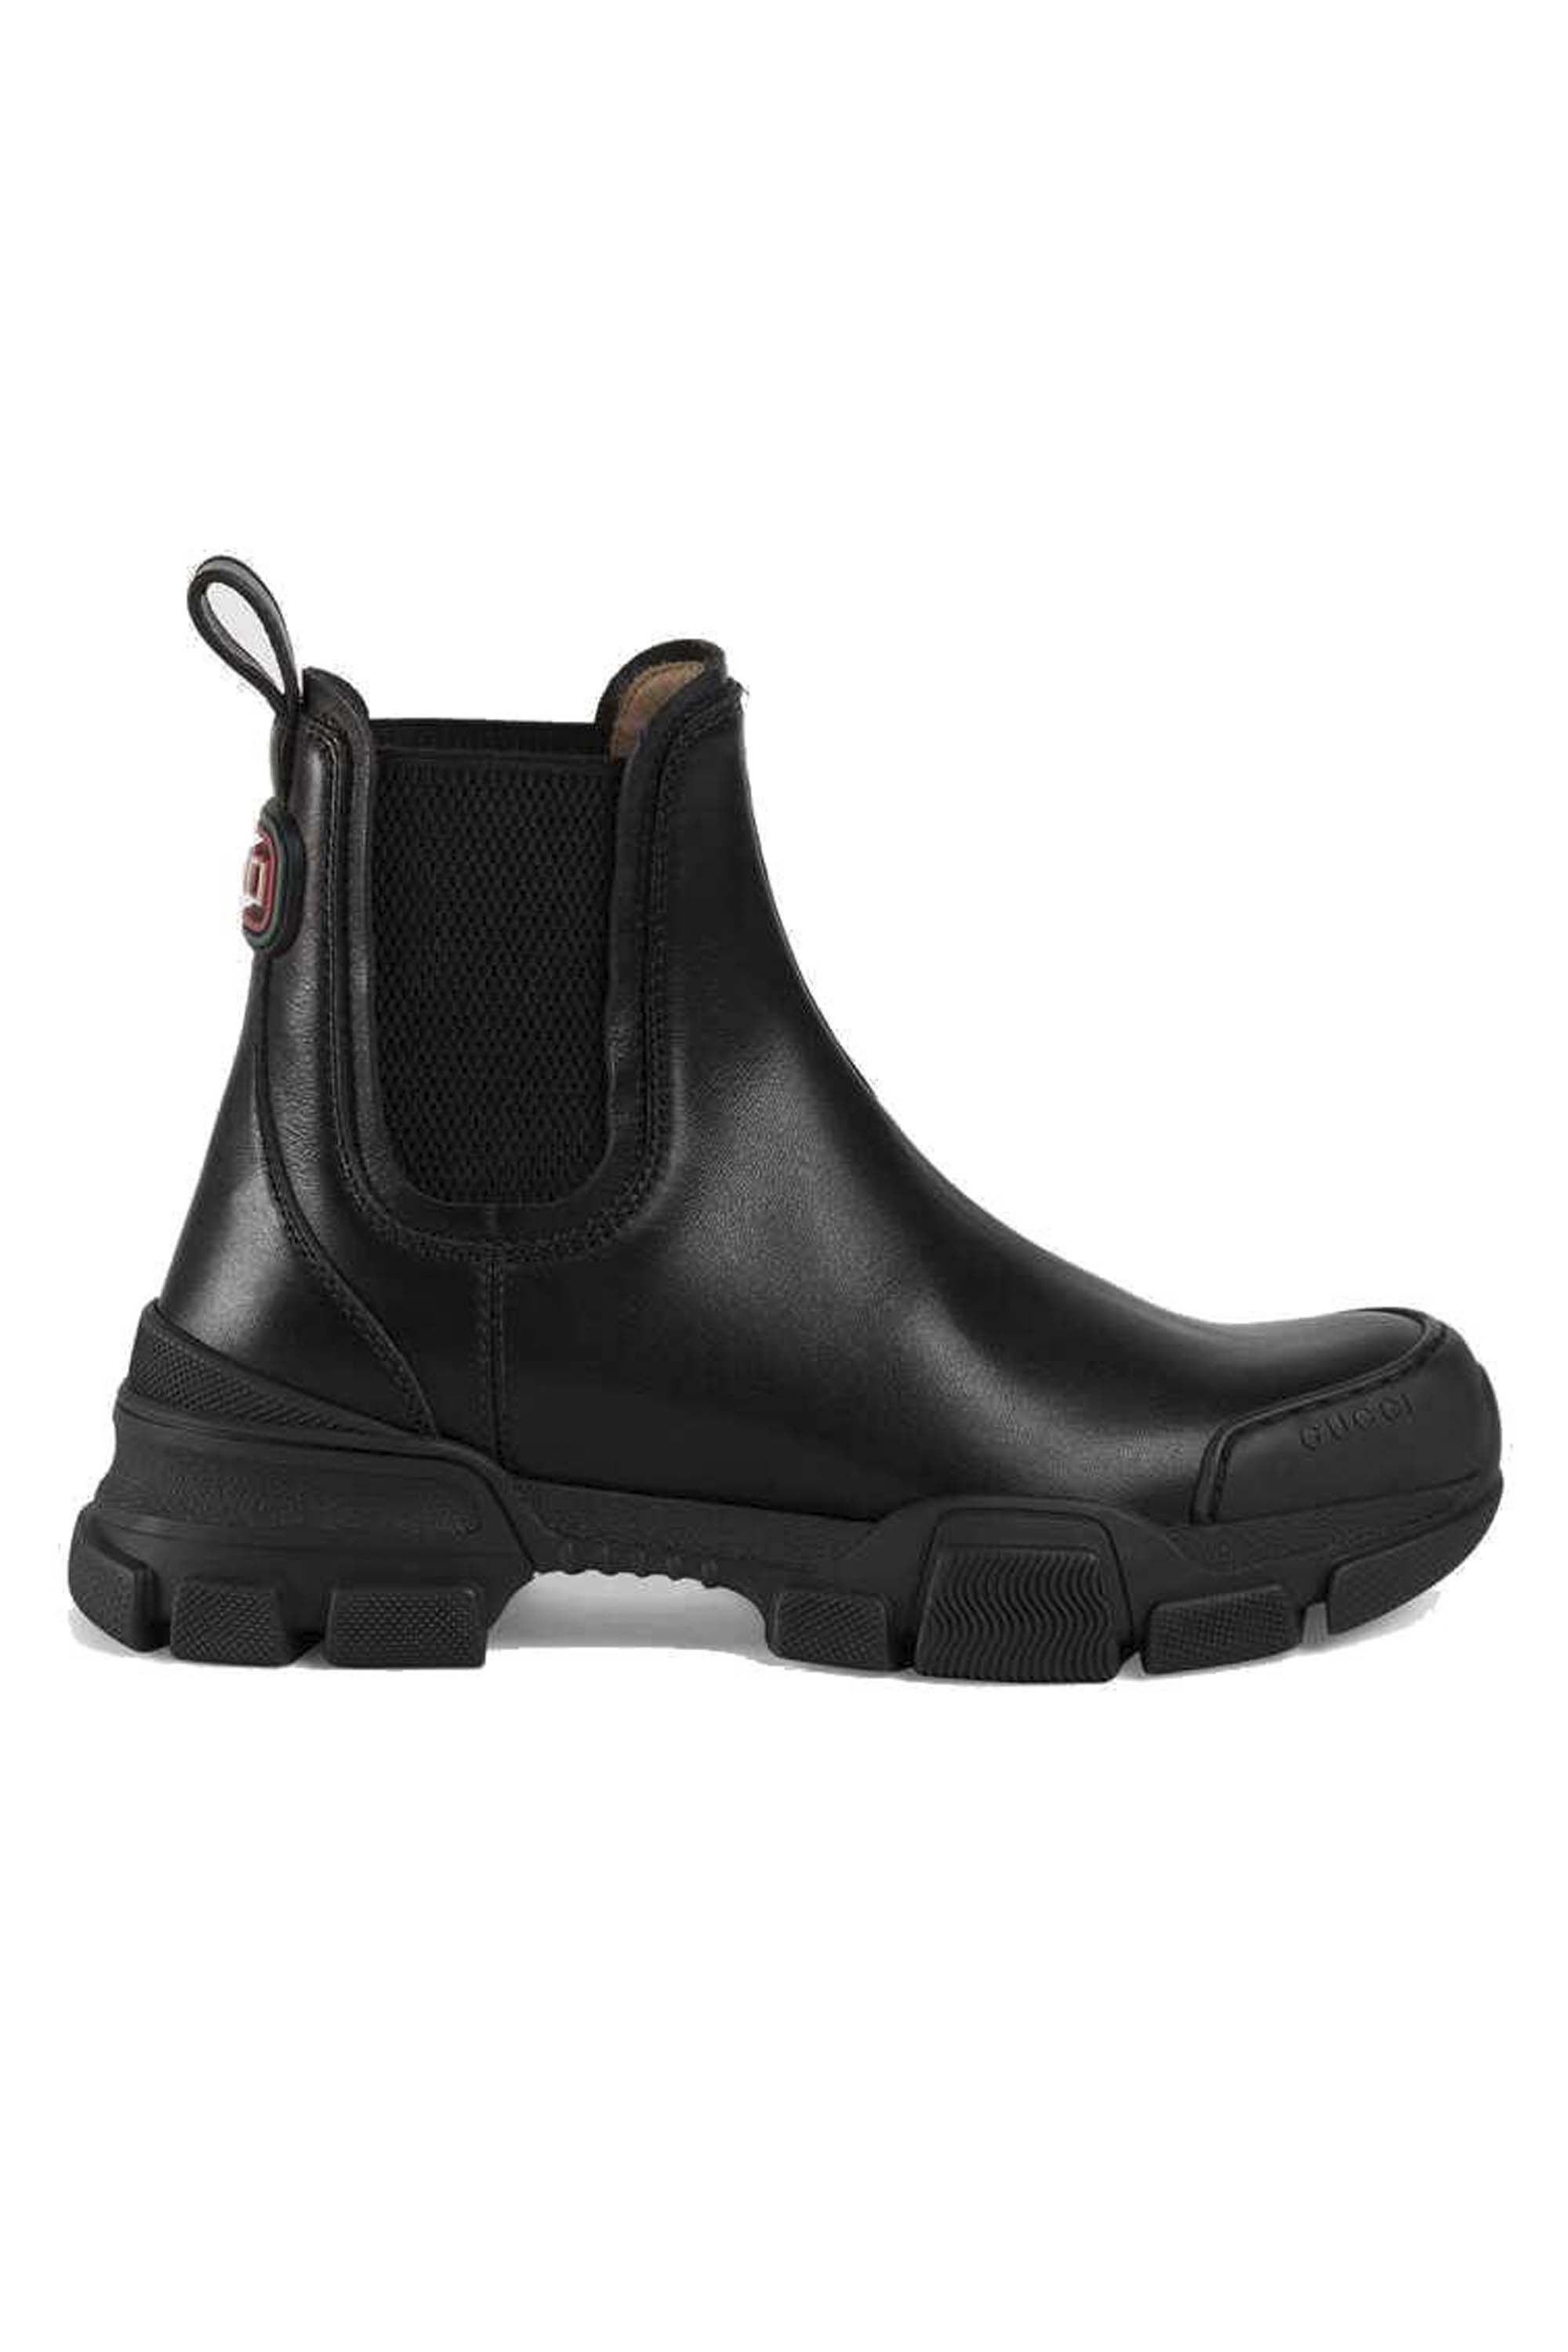 popular black boots